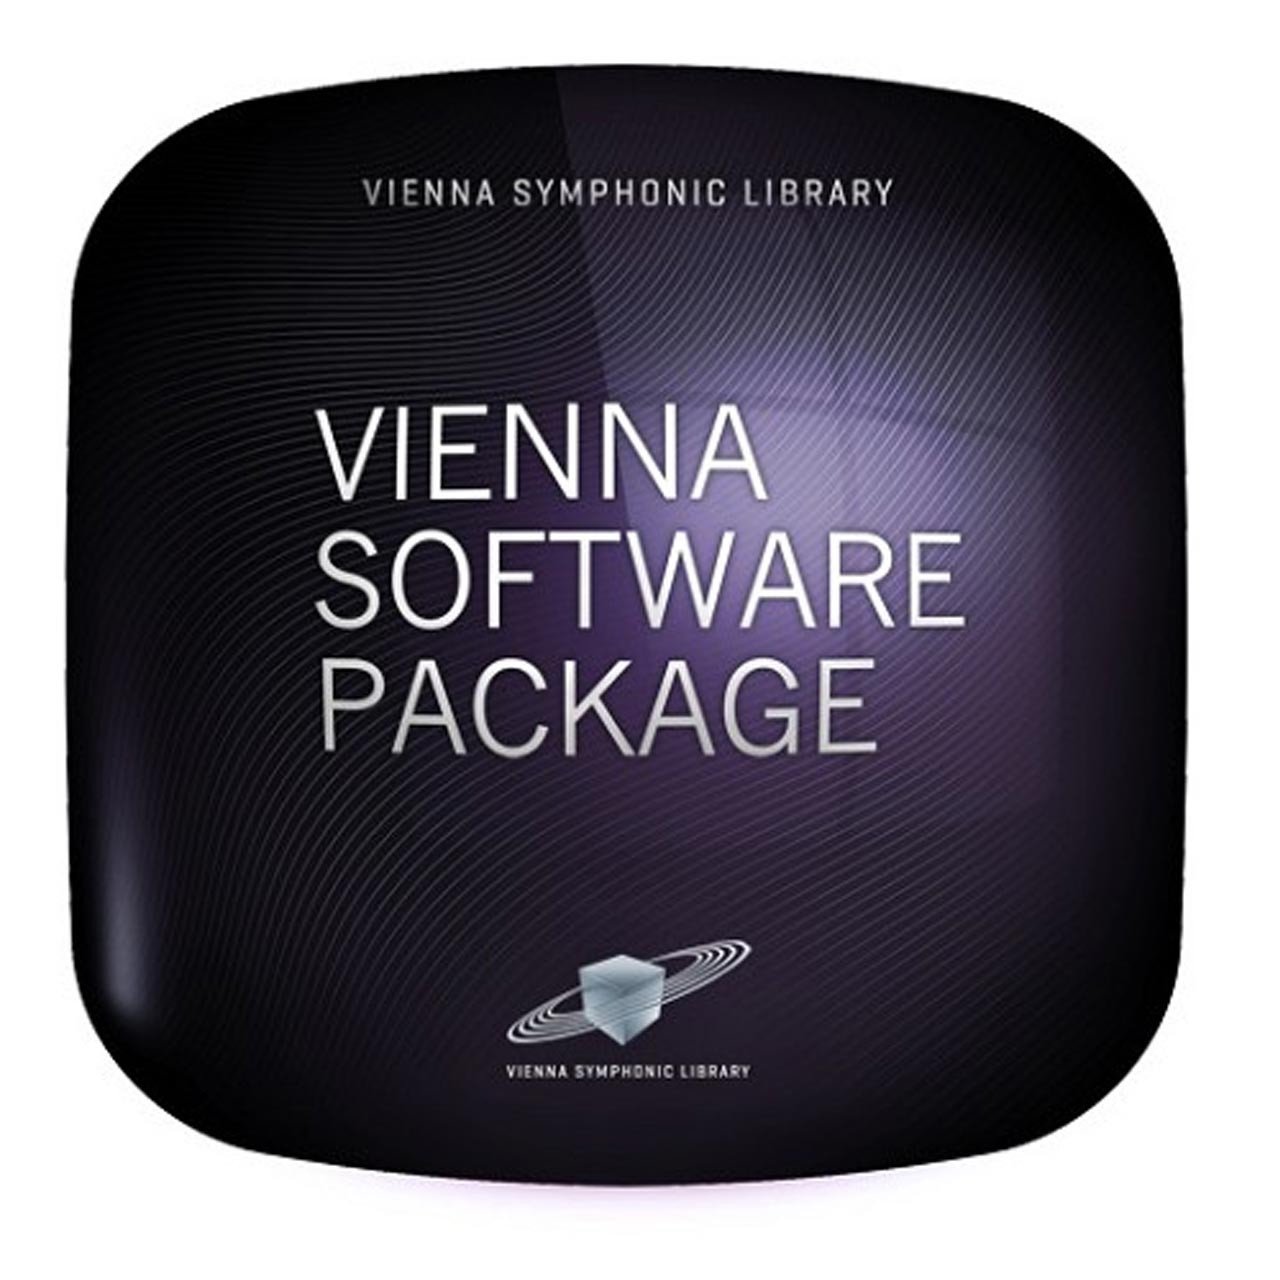 Software Bundles - Vienna Symphonic Library VSL - Vienna Software Package